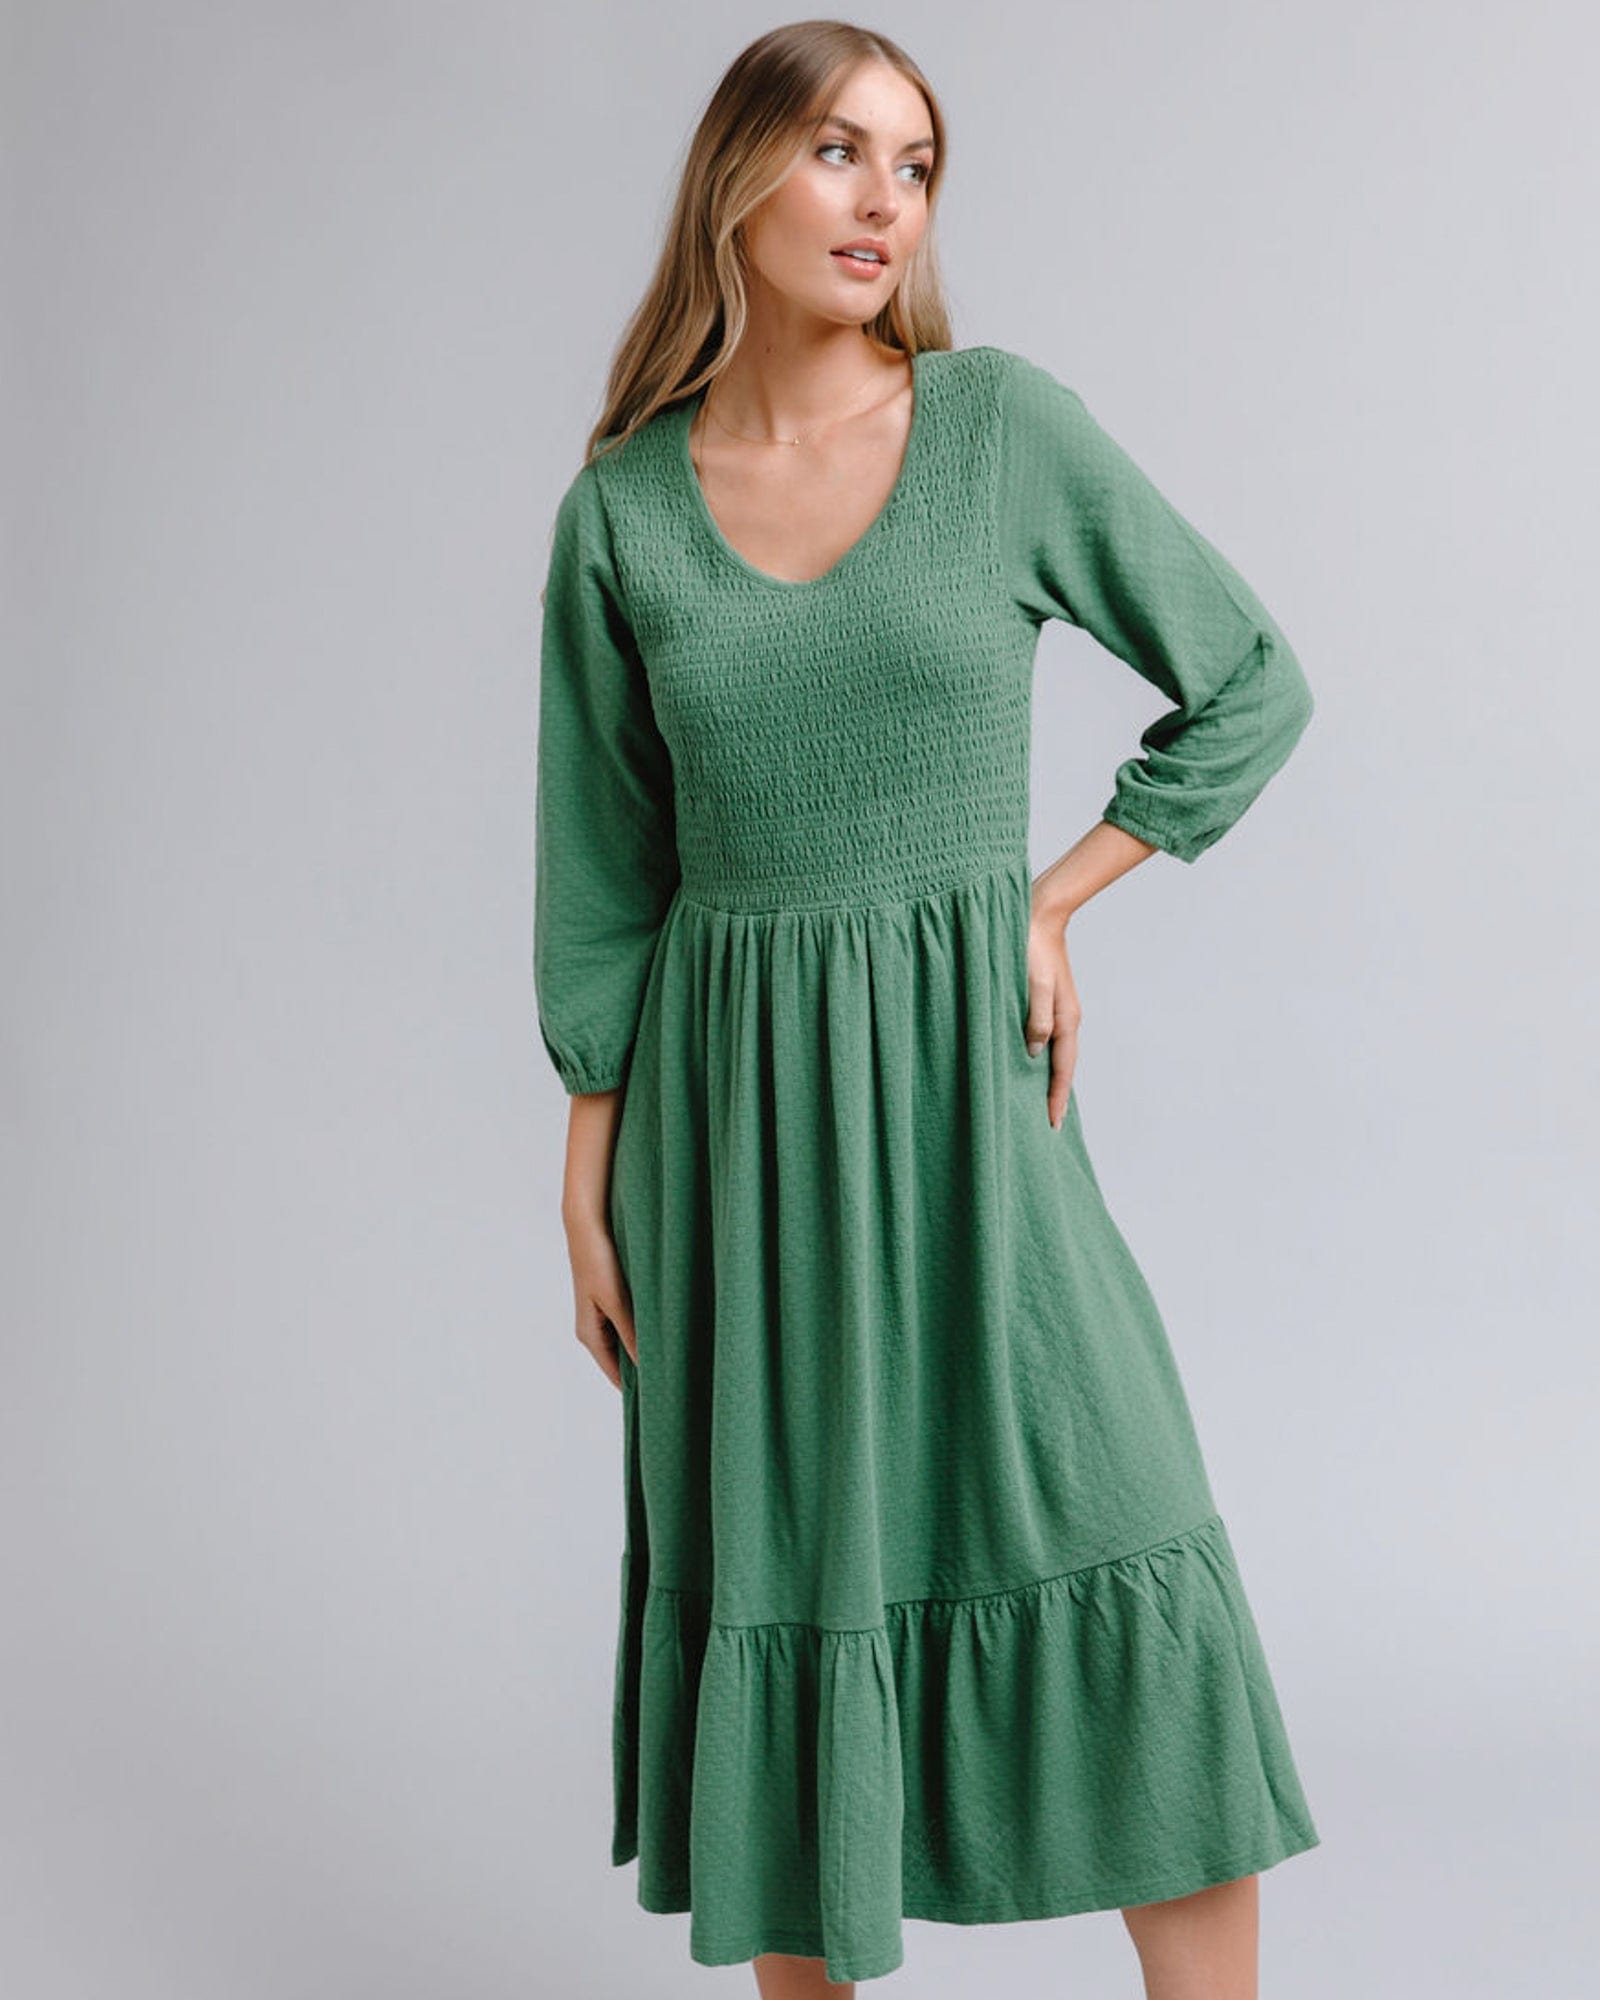 Woman in a long sleeve, midi-length, smocked bodice, green dress